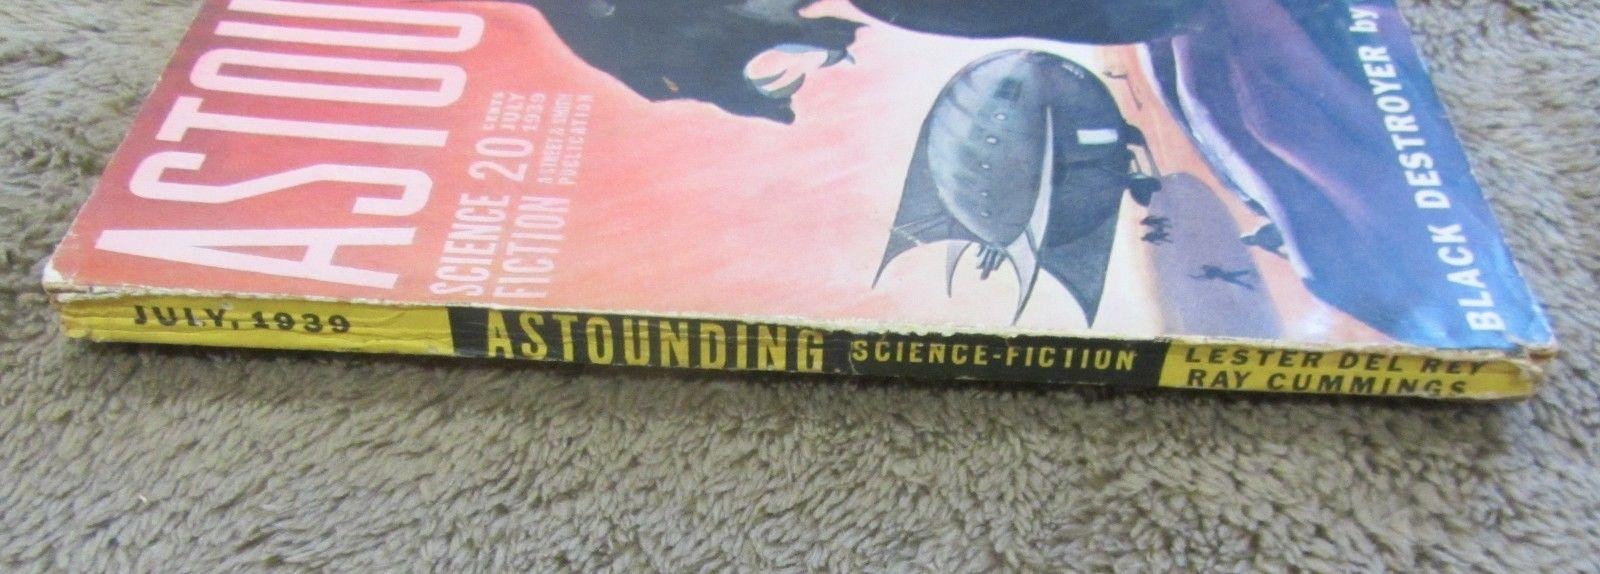 Astounding Science Fiction July 1939 1 Bf54717791e883a1ee89e4dcd7dab7f2